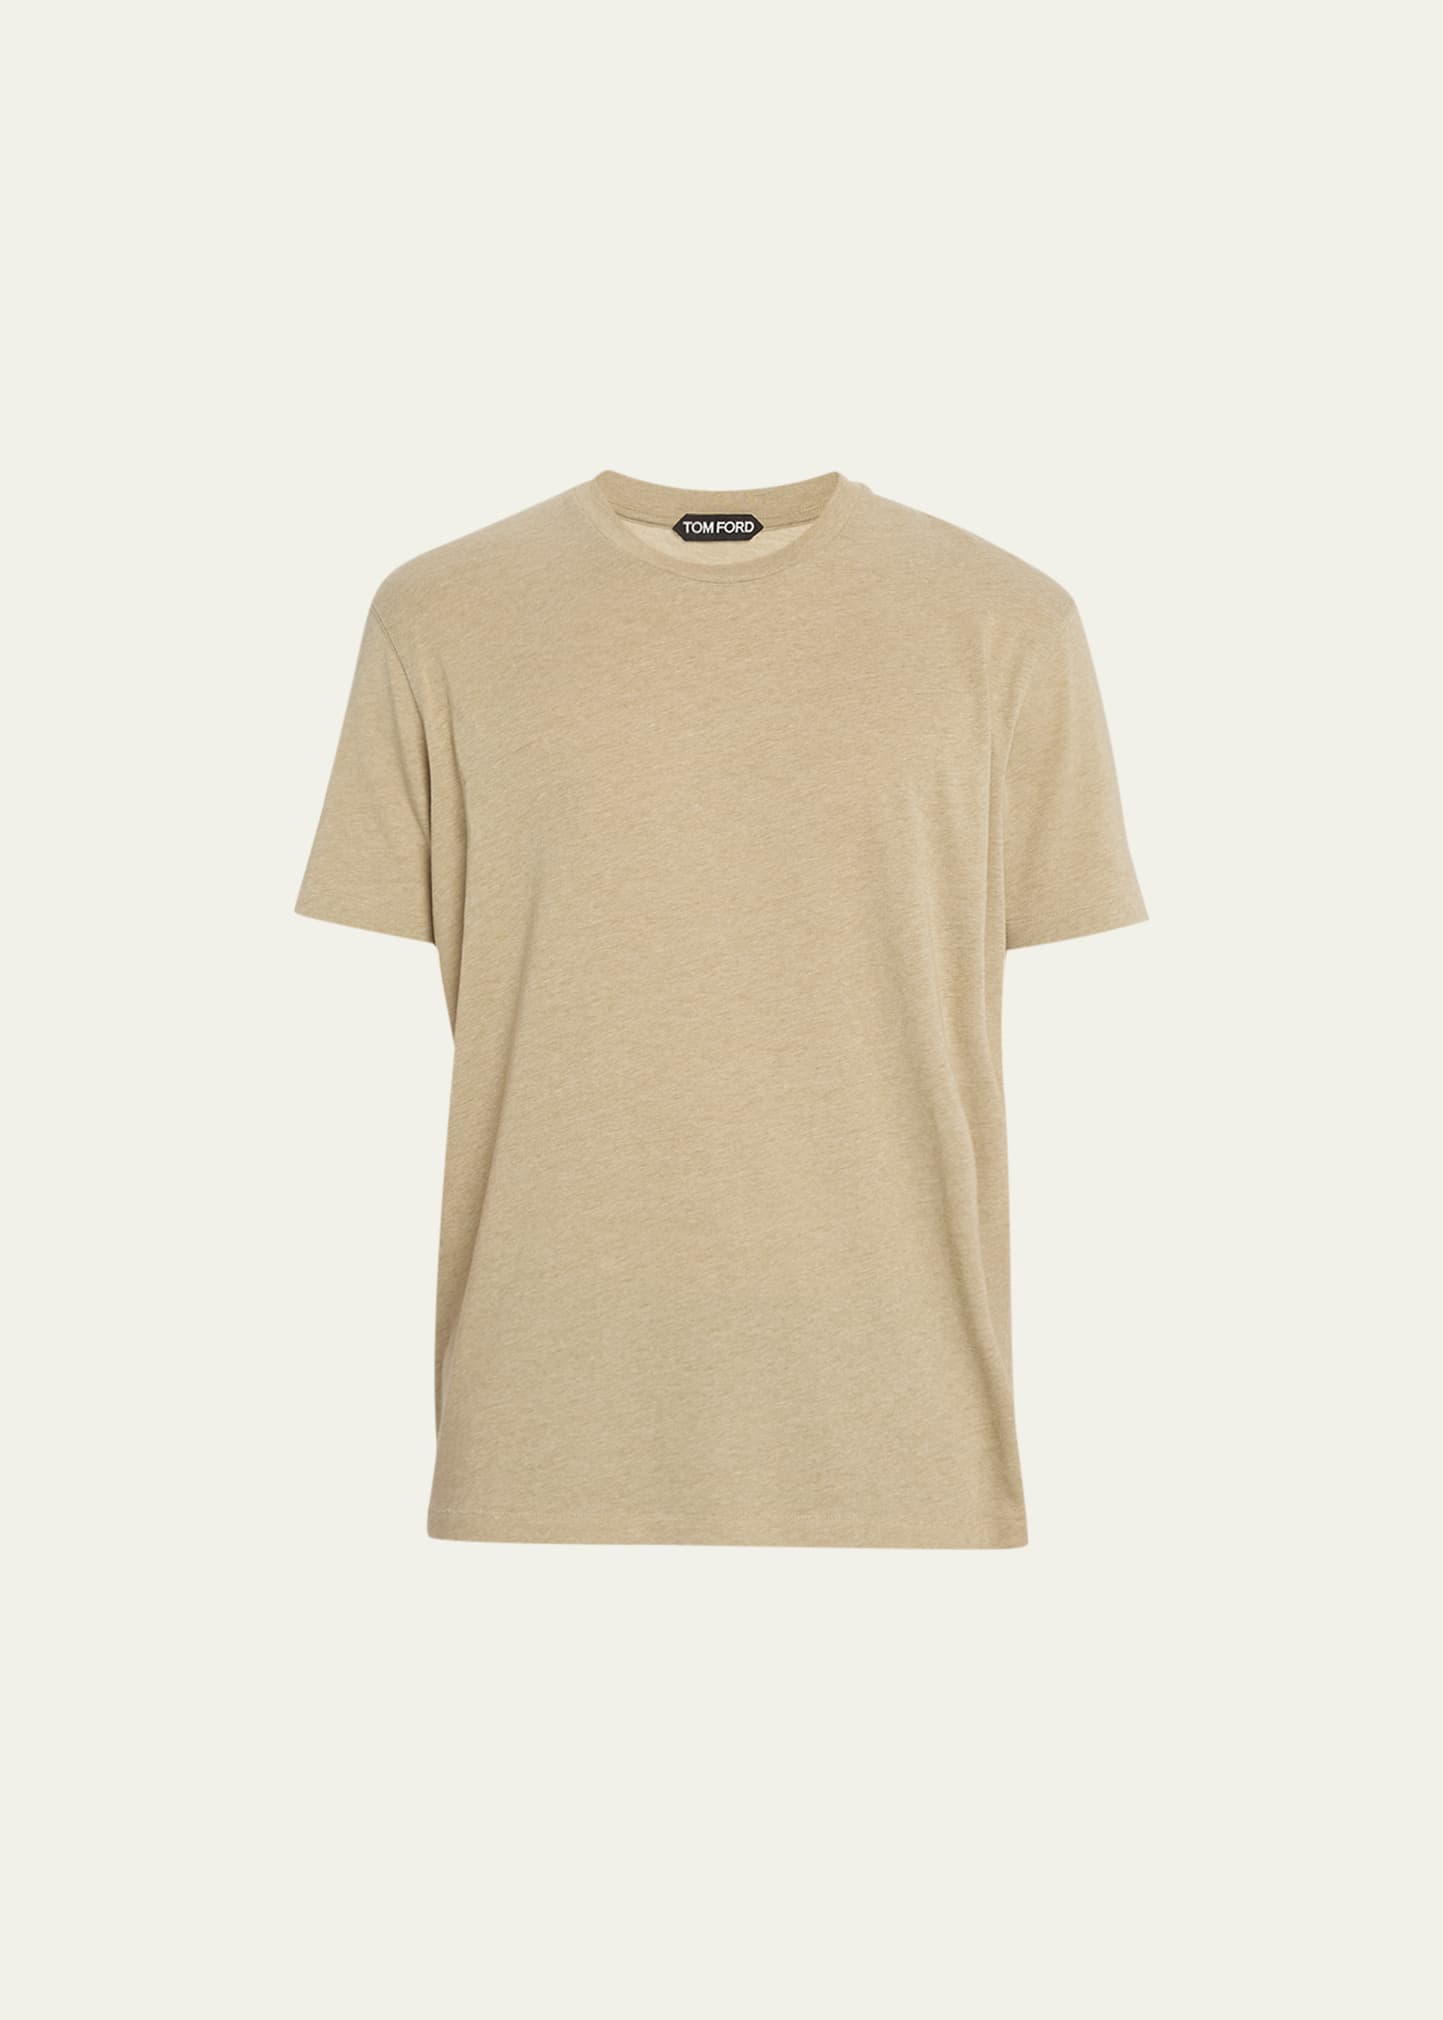 Tom Ford Men's Cotton Crewneck T-shirt In Pale Olive